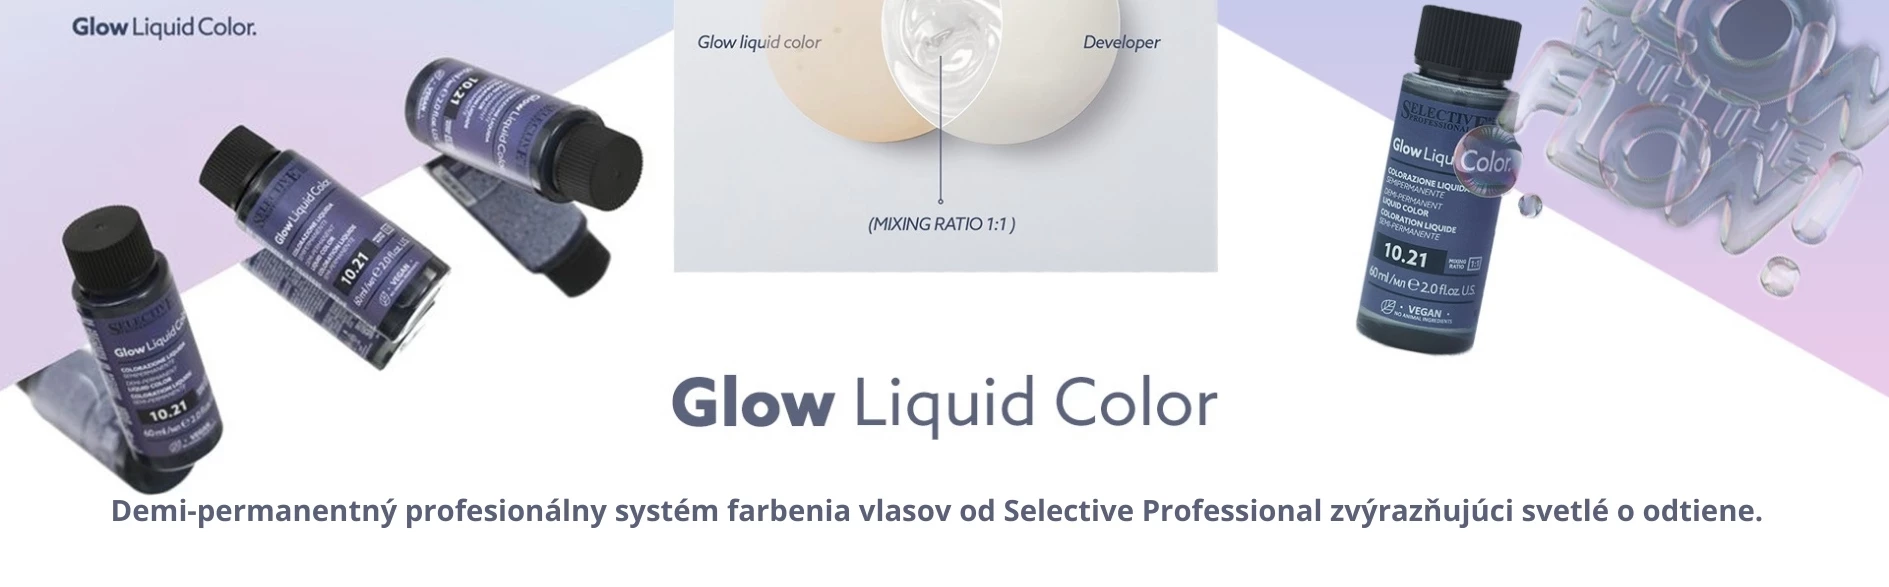 Glow Liquid Color